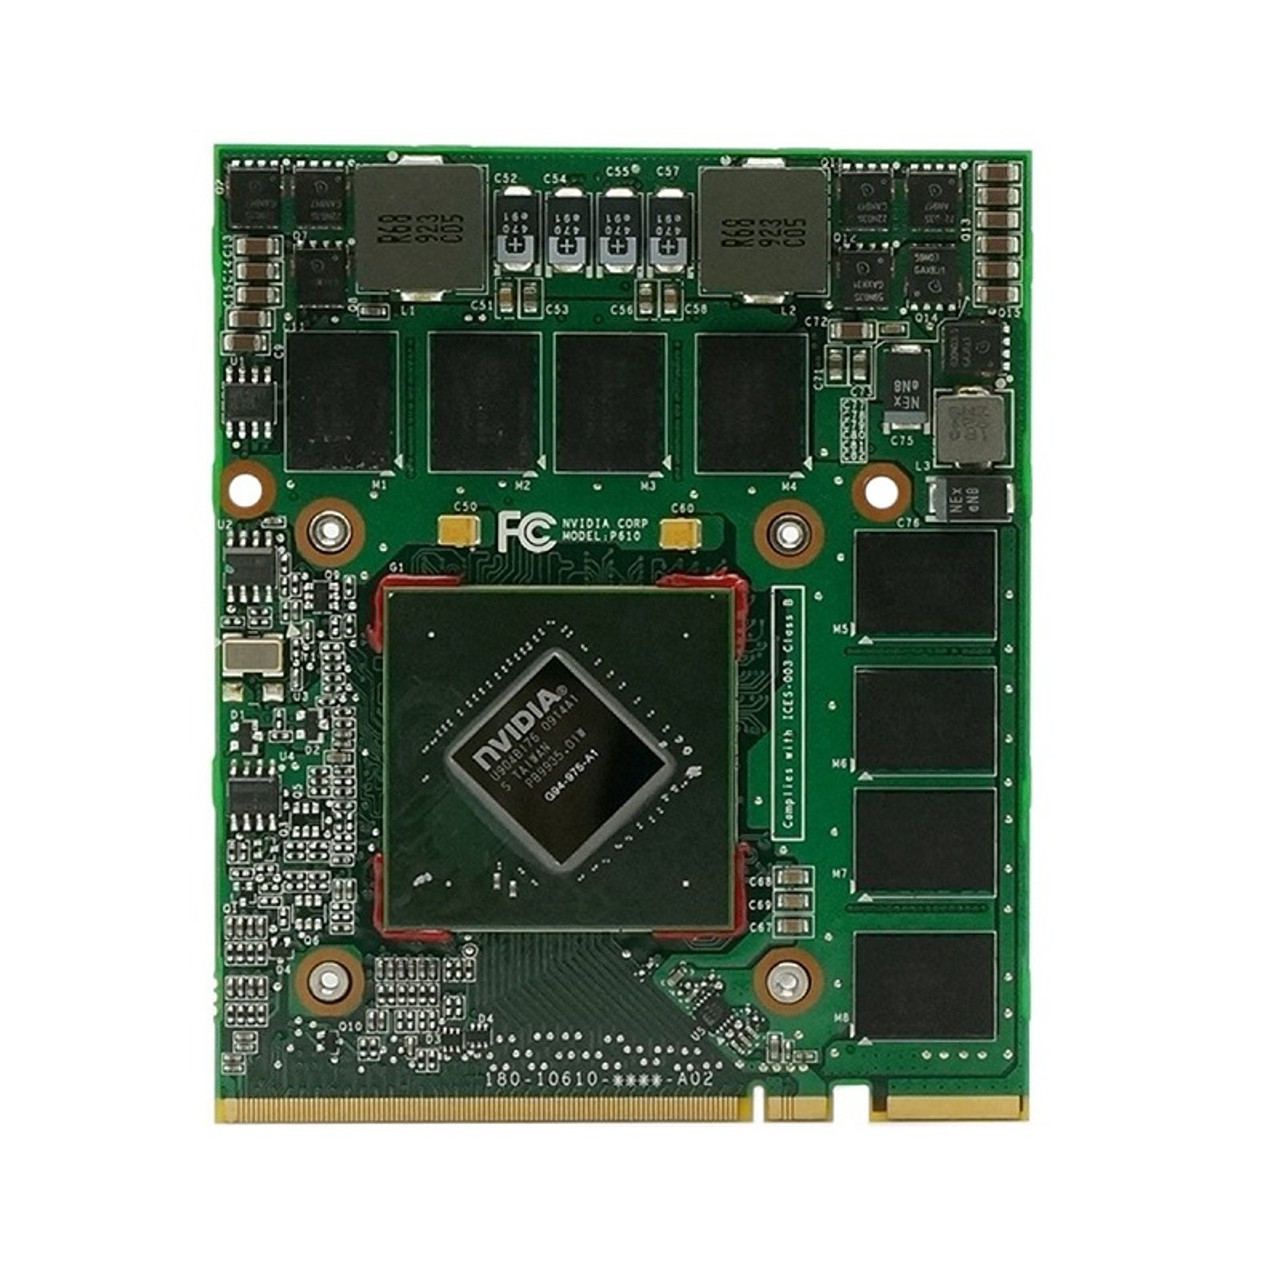 686157-001 - HP Nvidia Quadro 1000M PCI-Express 2GB GDDR5 Mezzanine Video Graphics Card